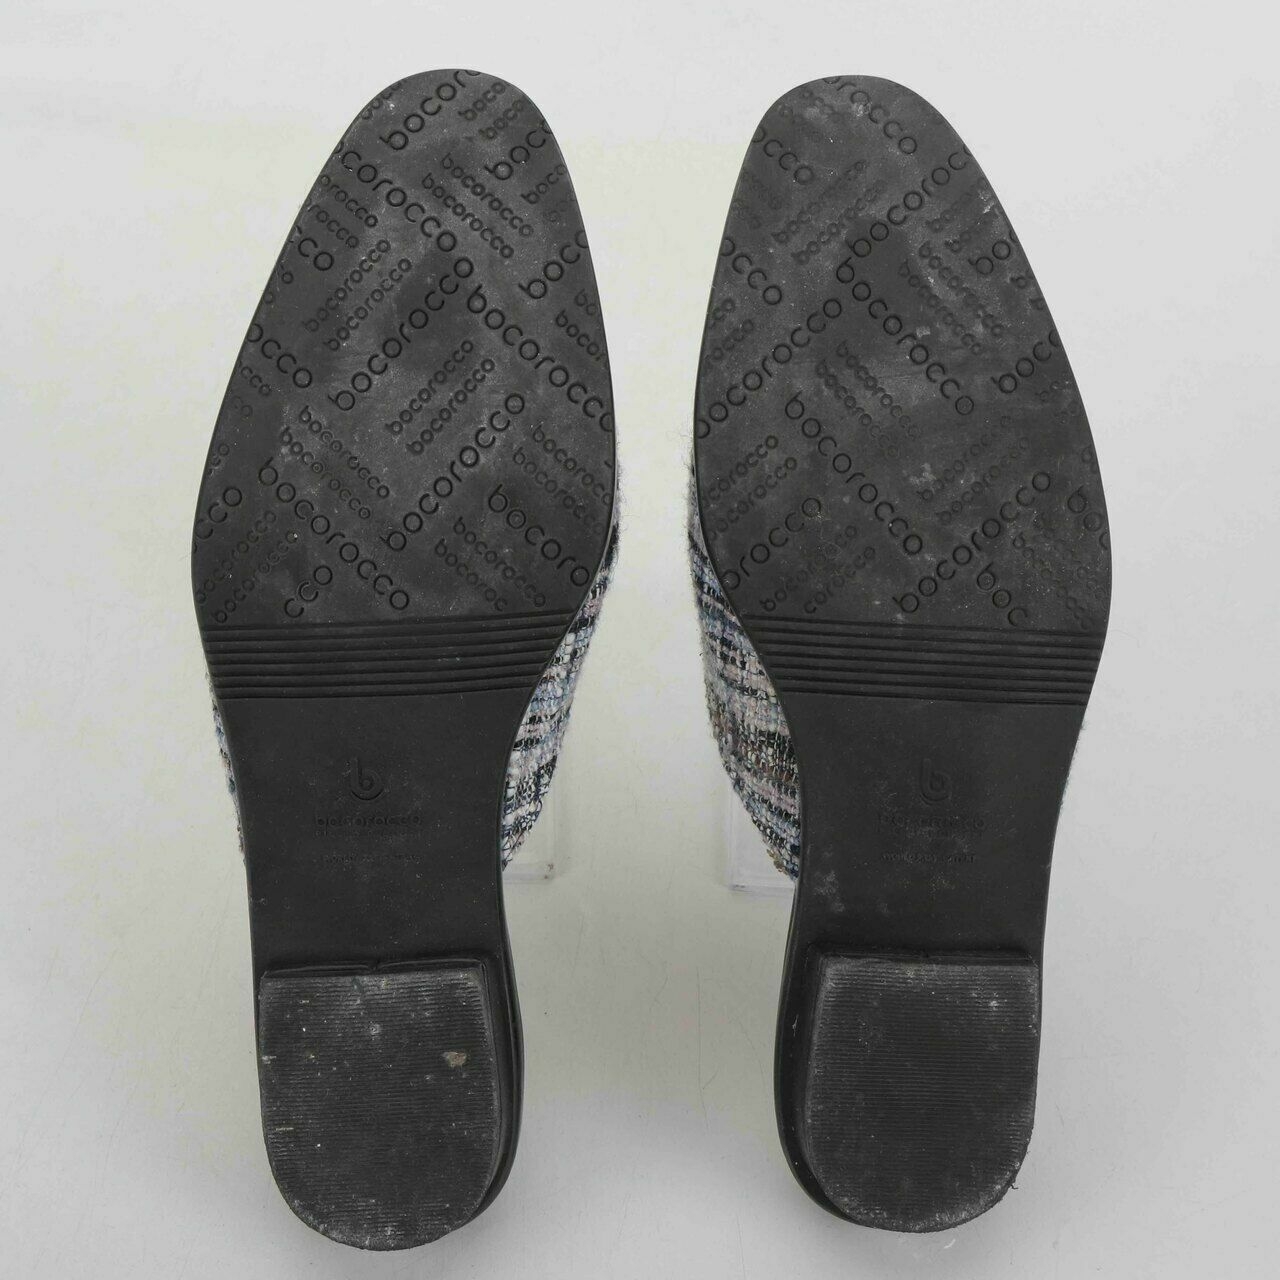 Bocorocco Multi Mules Sandals